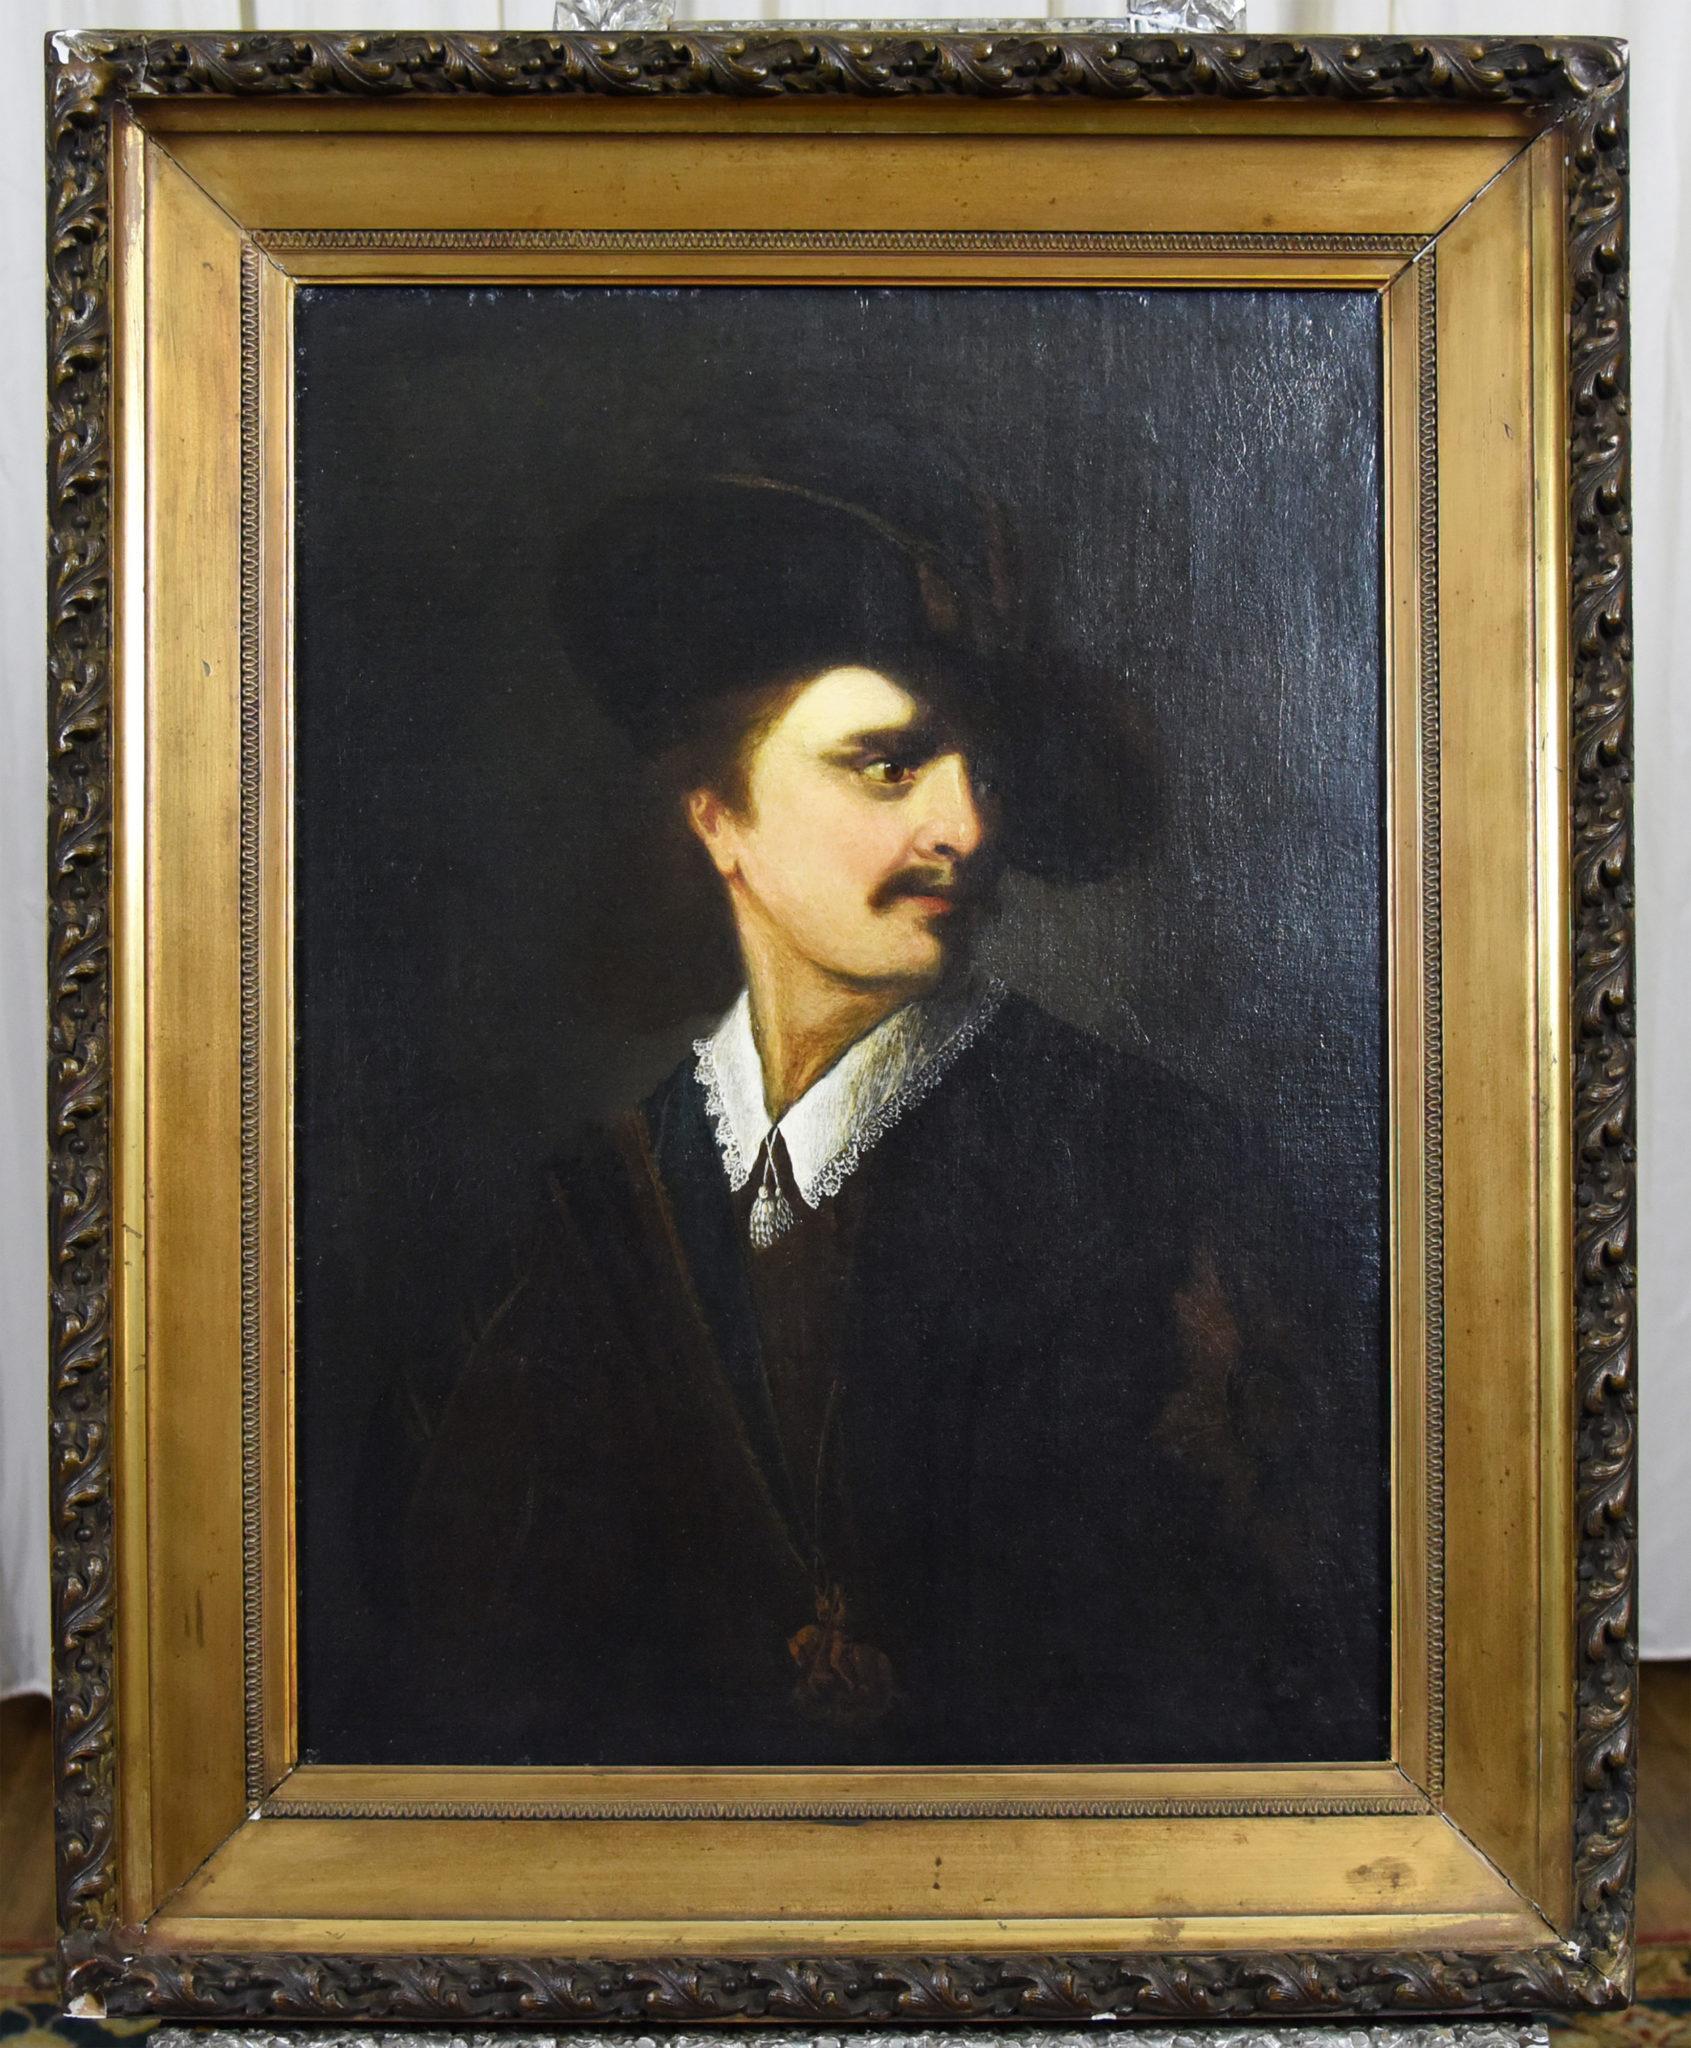 Unknown Portrait Painting - 18th Century Portrait Oil Painting of a Noble Gentleman